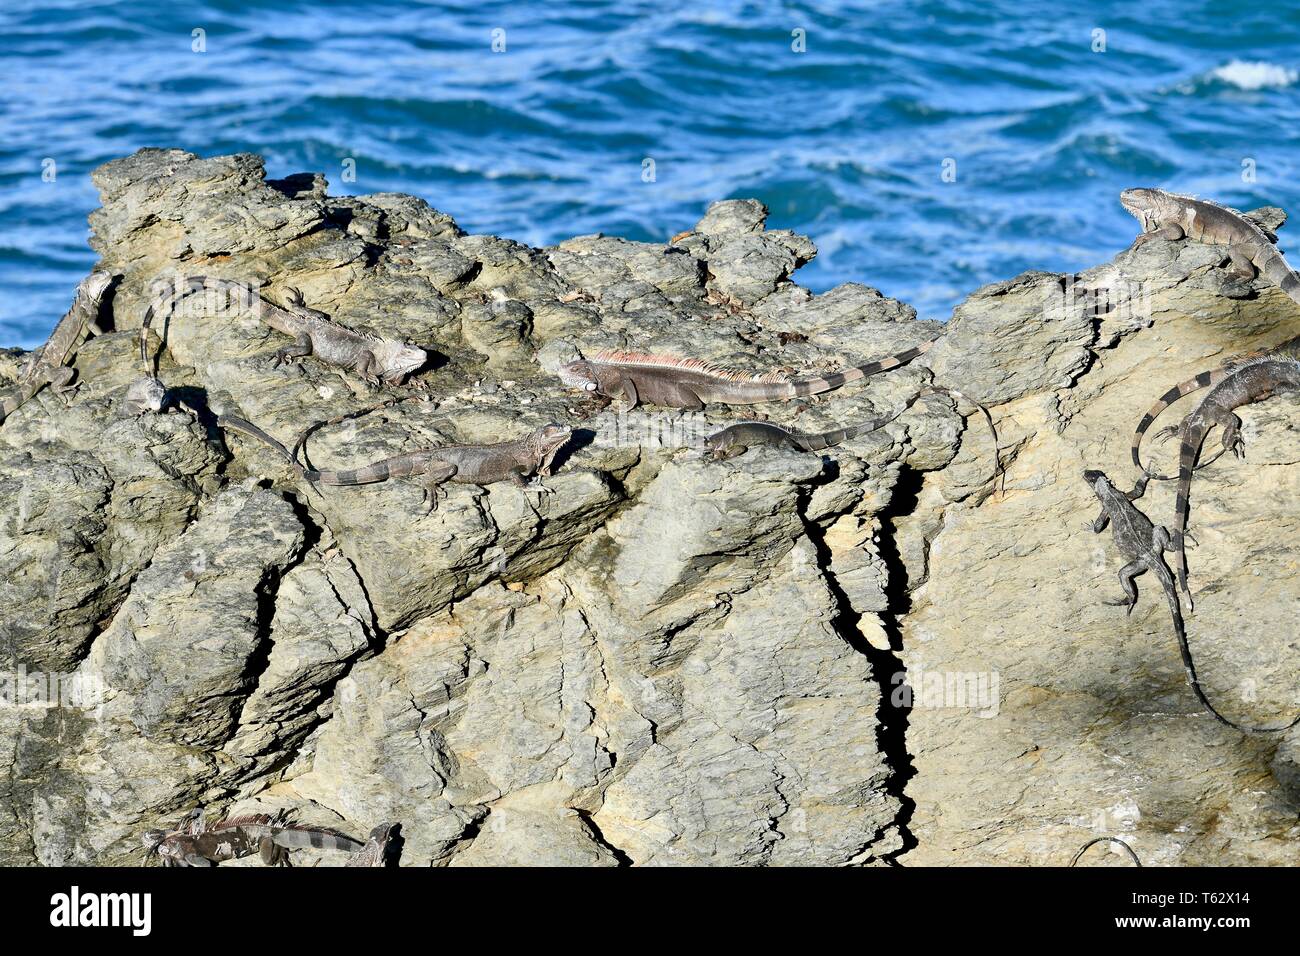 Iguana found on the island of St. Croix, United States Virgin Islands Stock Photo